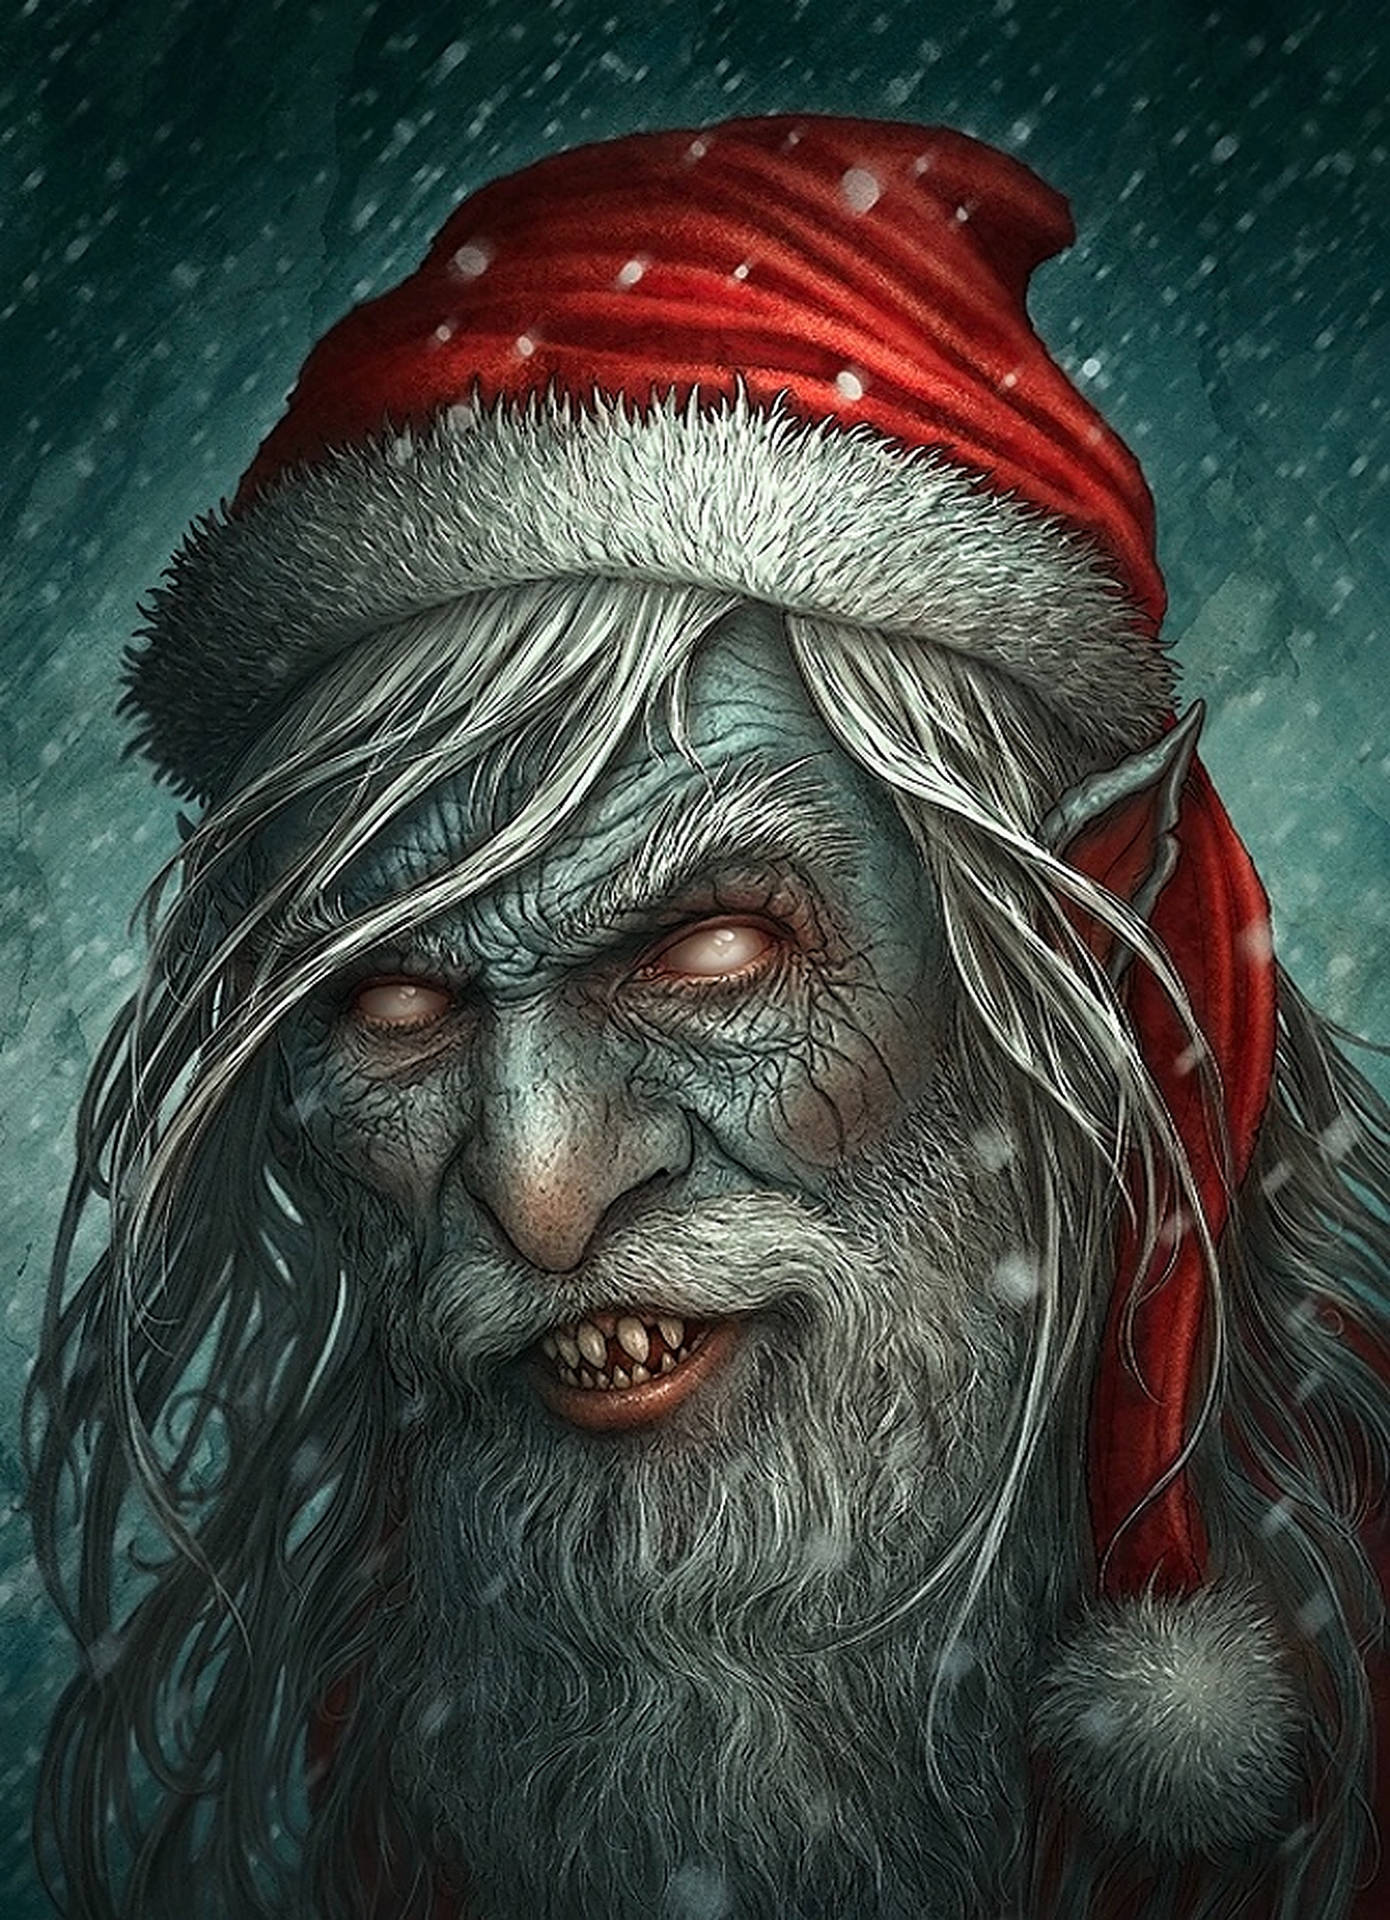 Evil Santa - A Dark Twist On Christmas Tradition